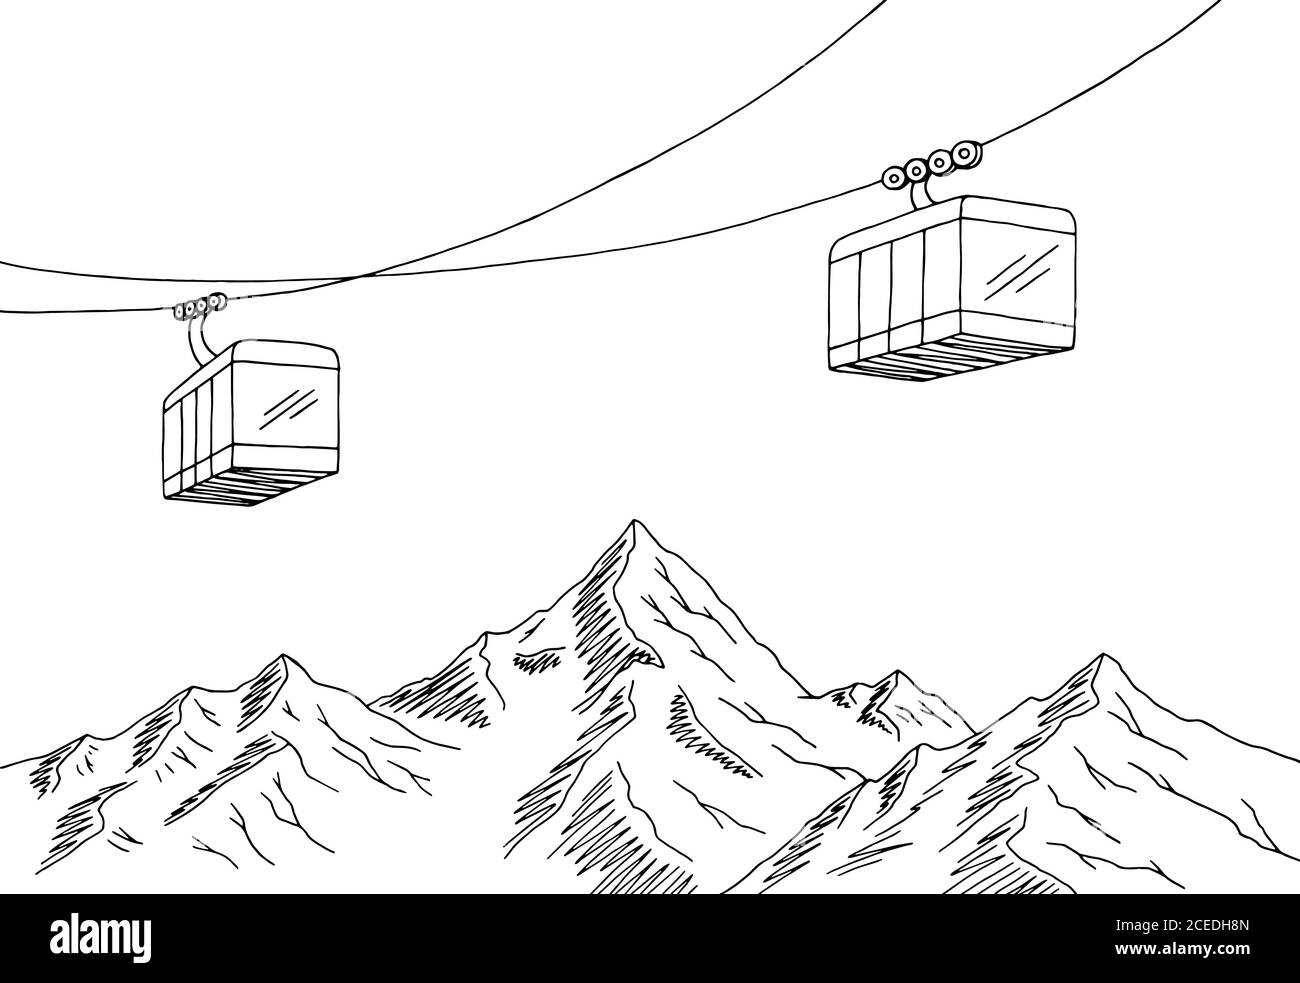 Cable car graphic mountain black white landscape sketch illustration vector Stock Vector